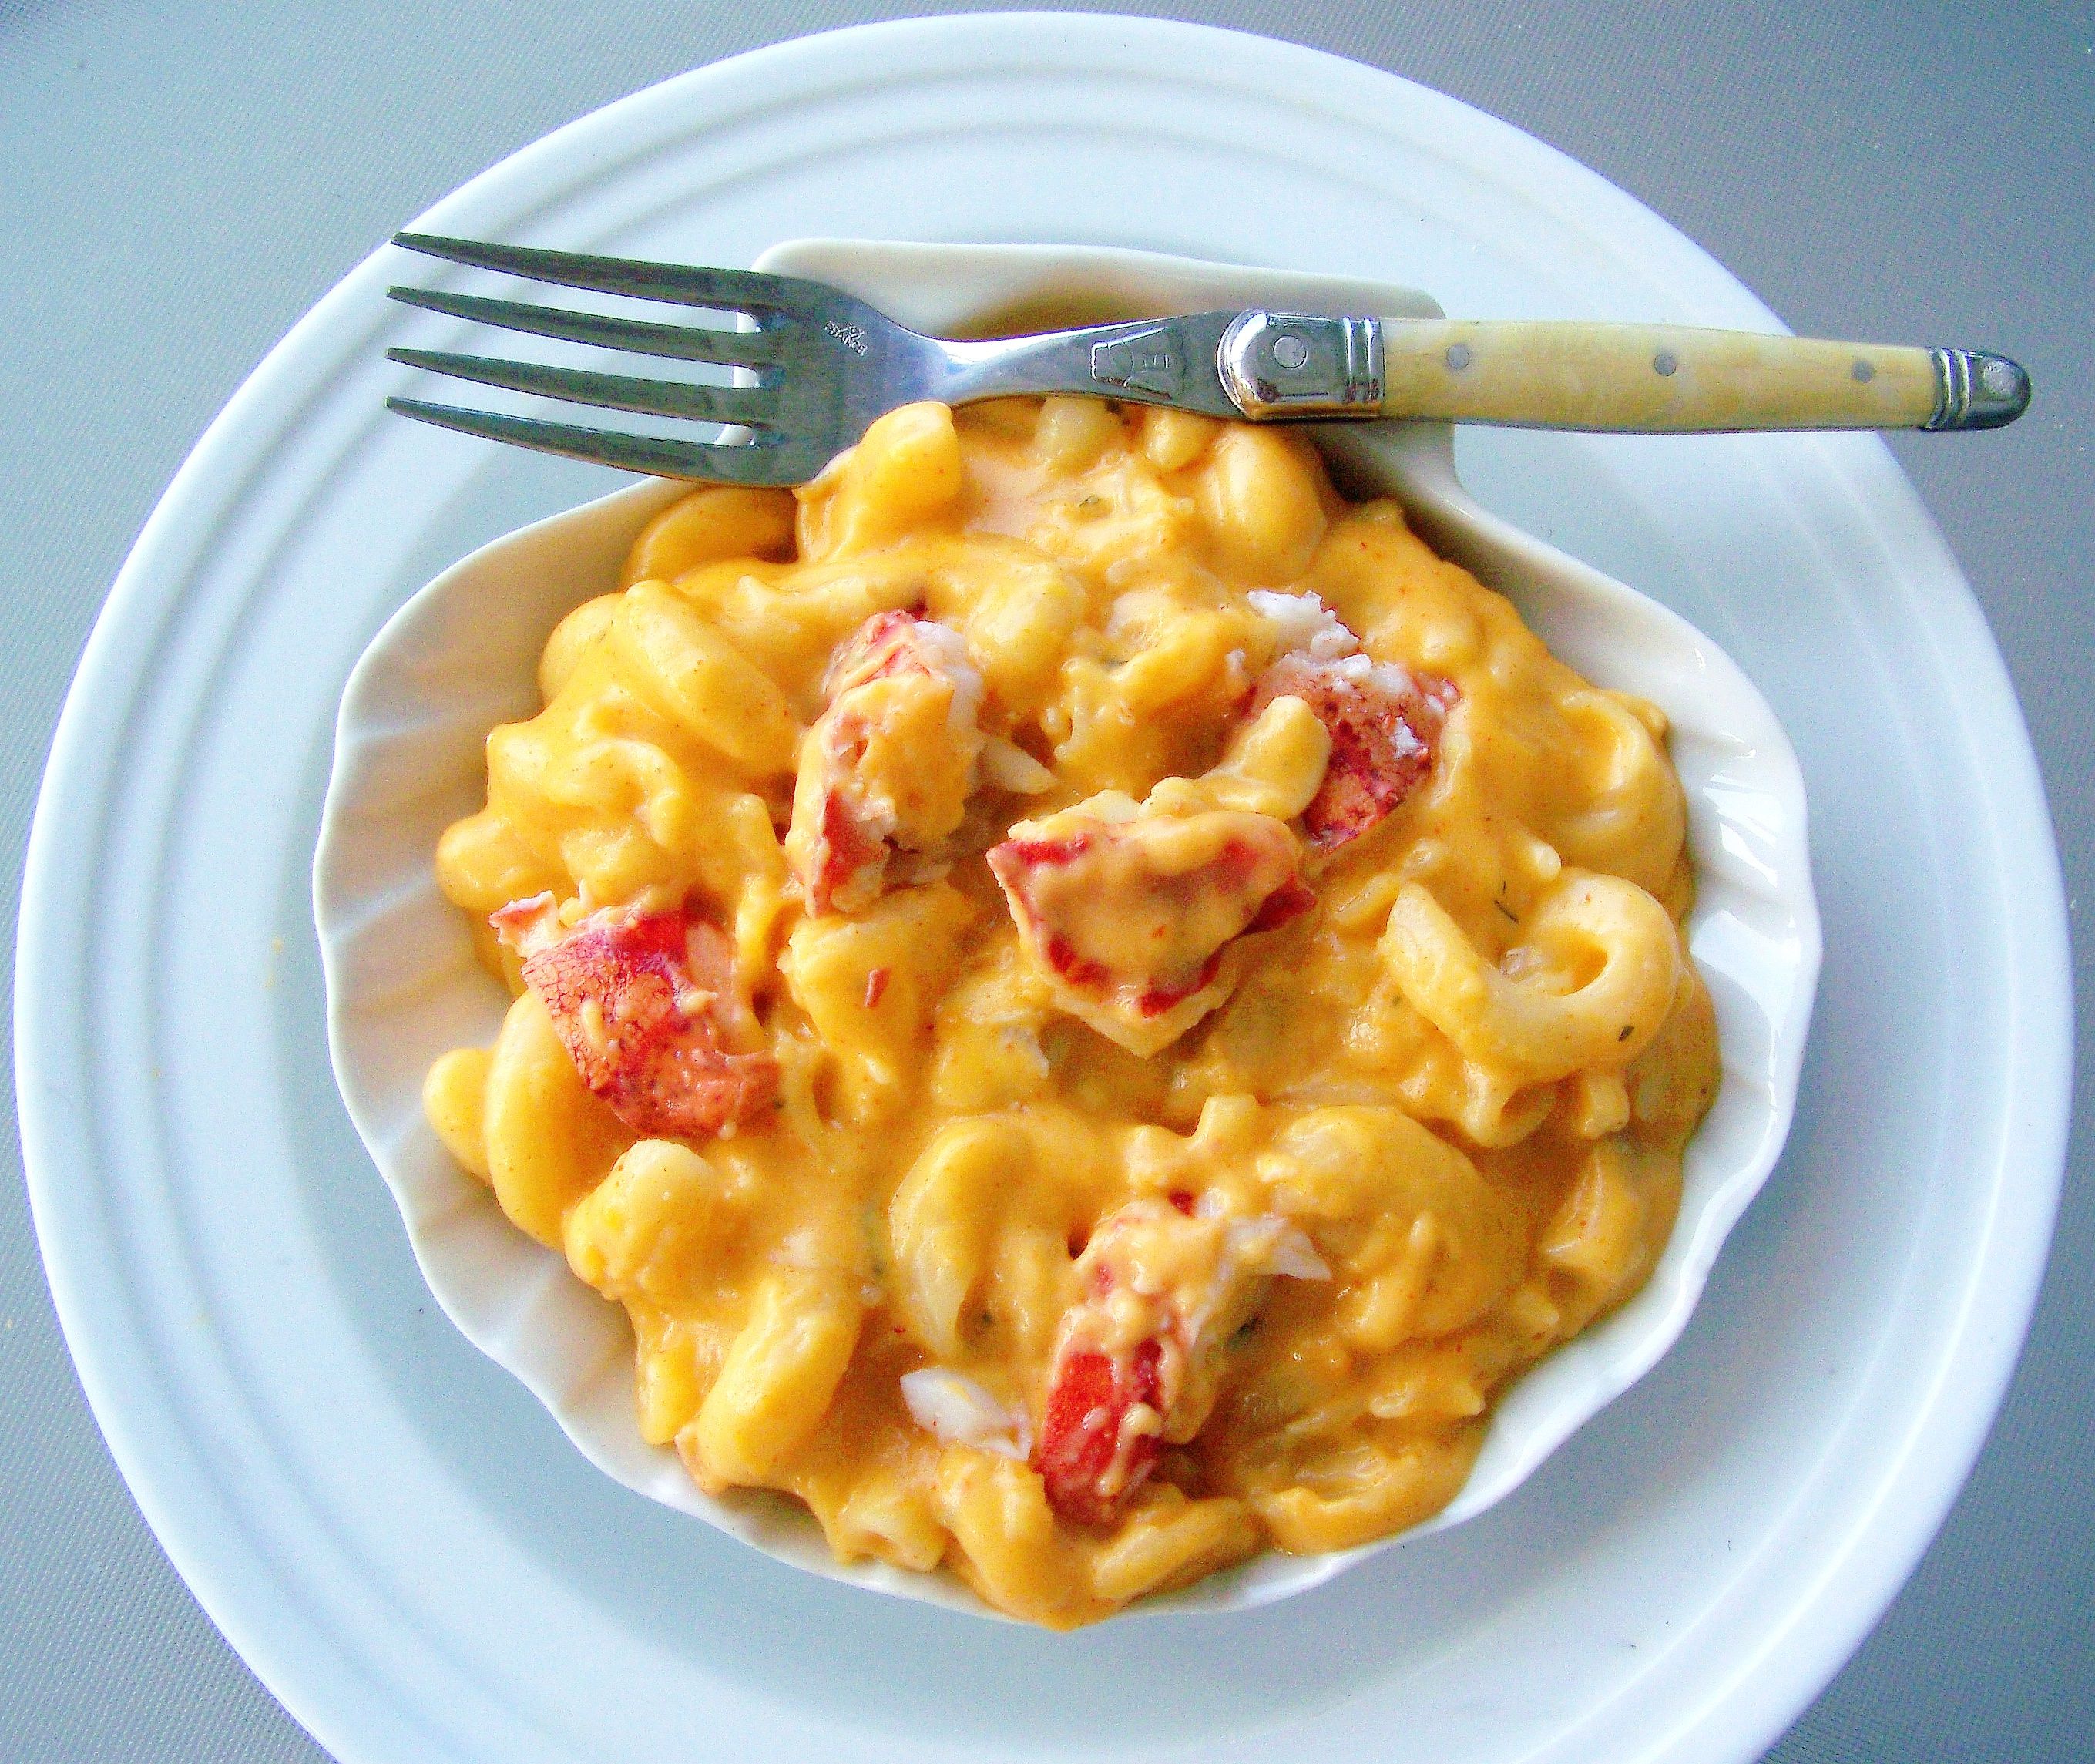 seafood macaroni and cheese recipes